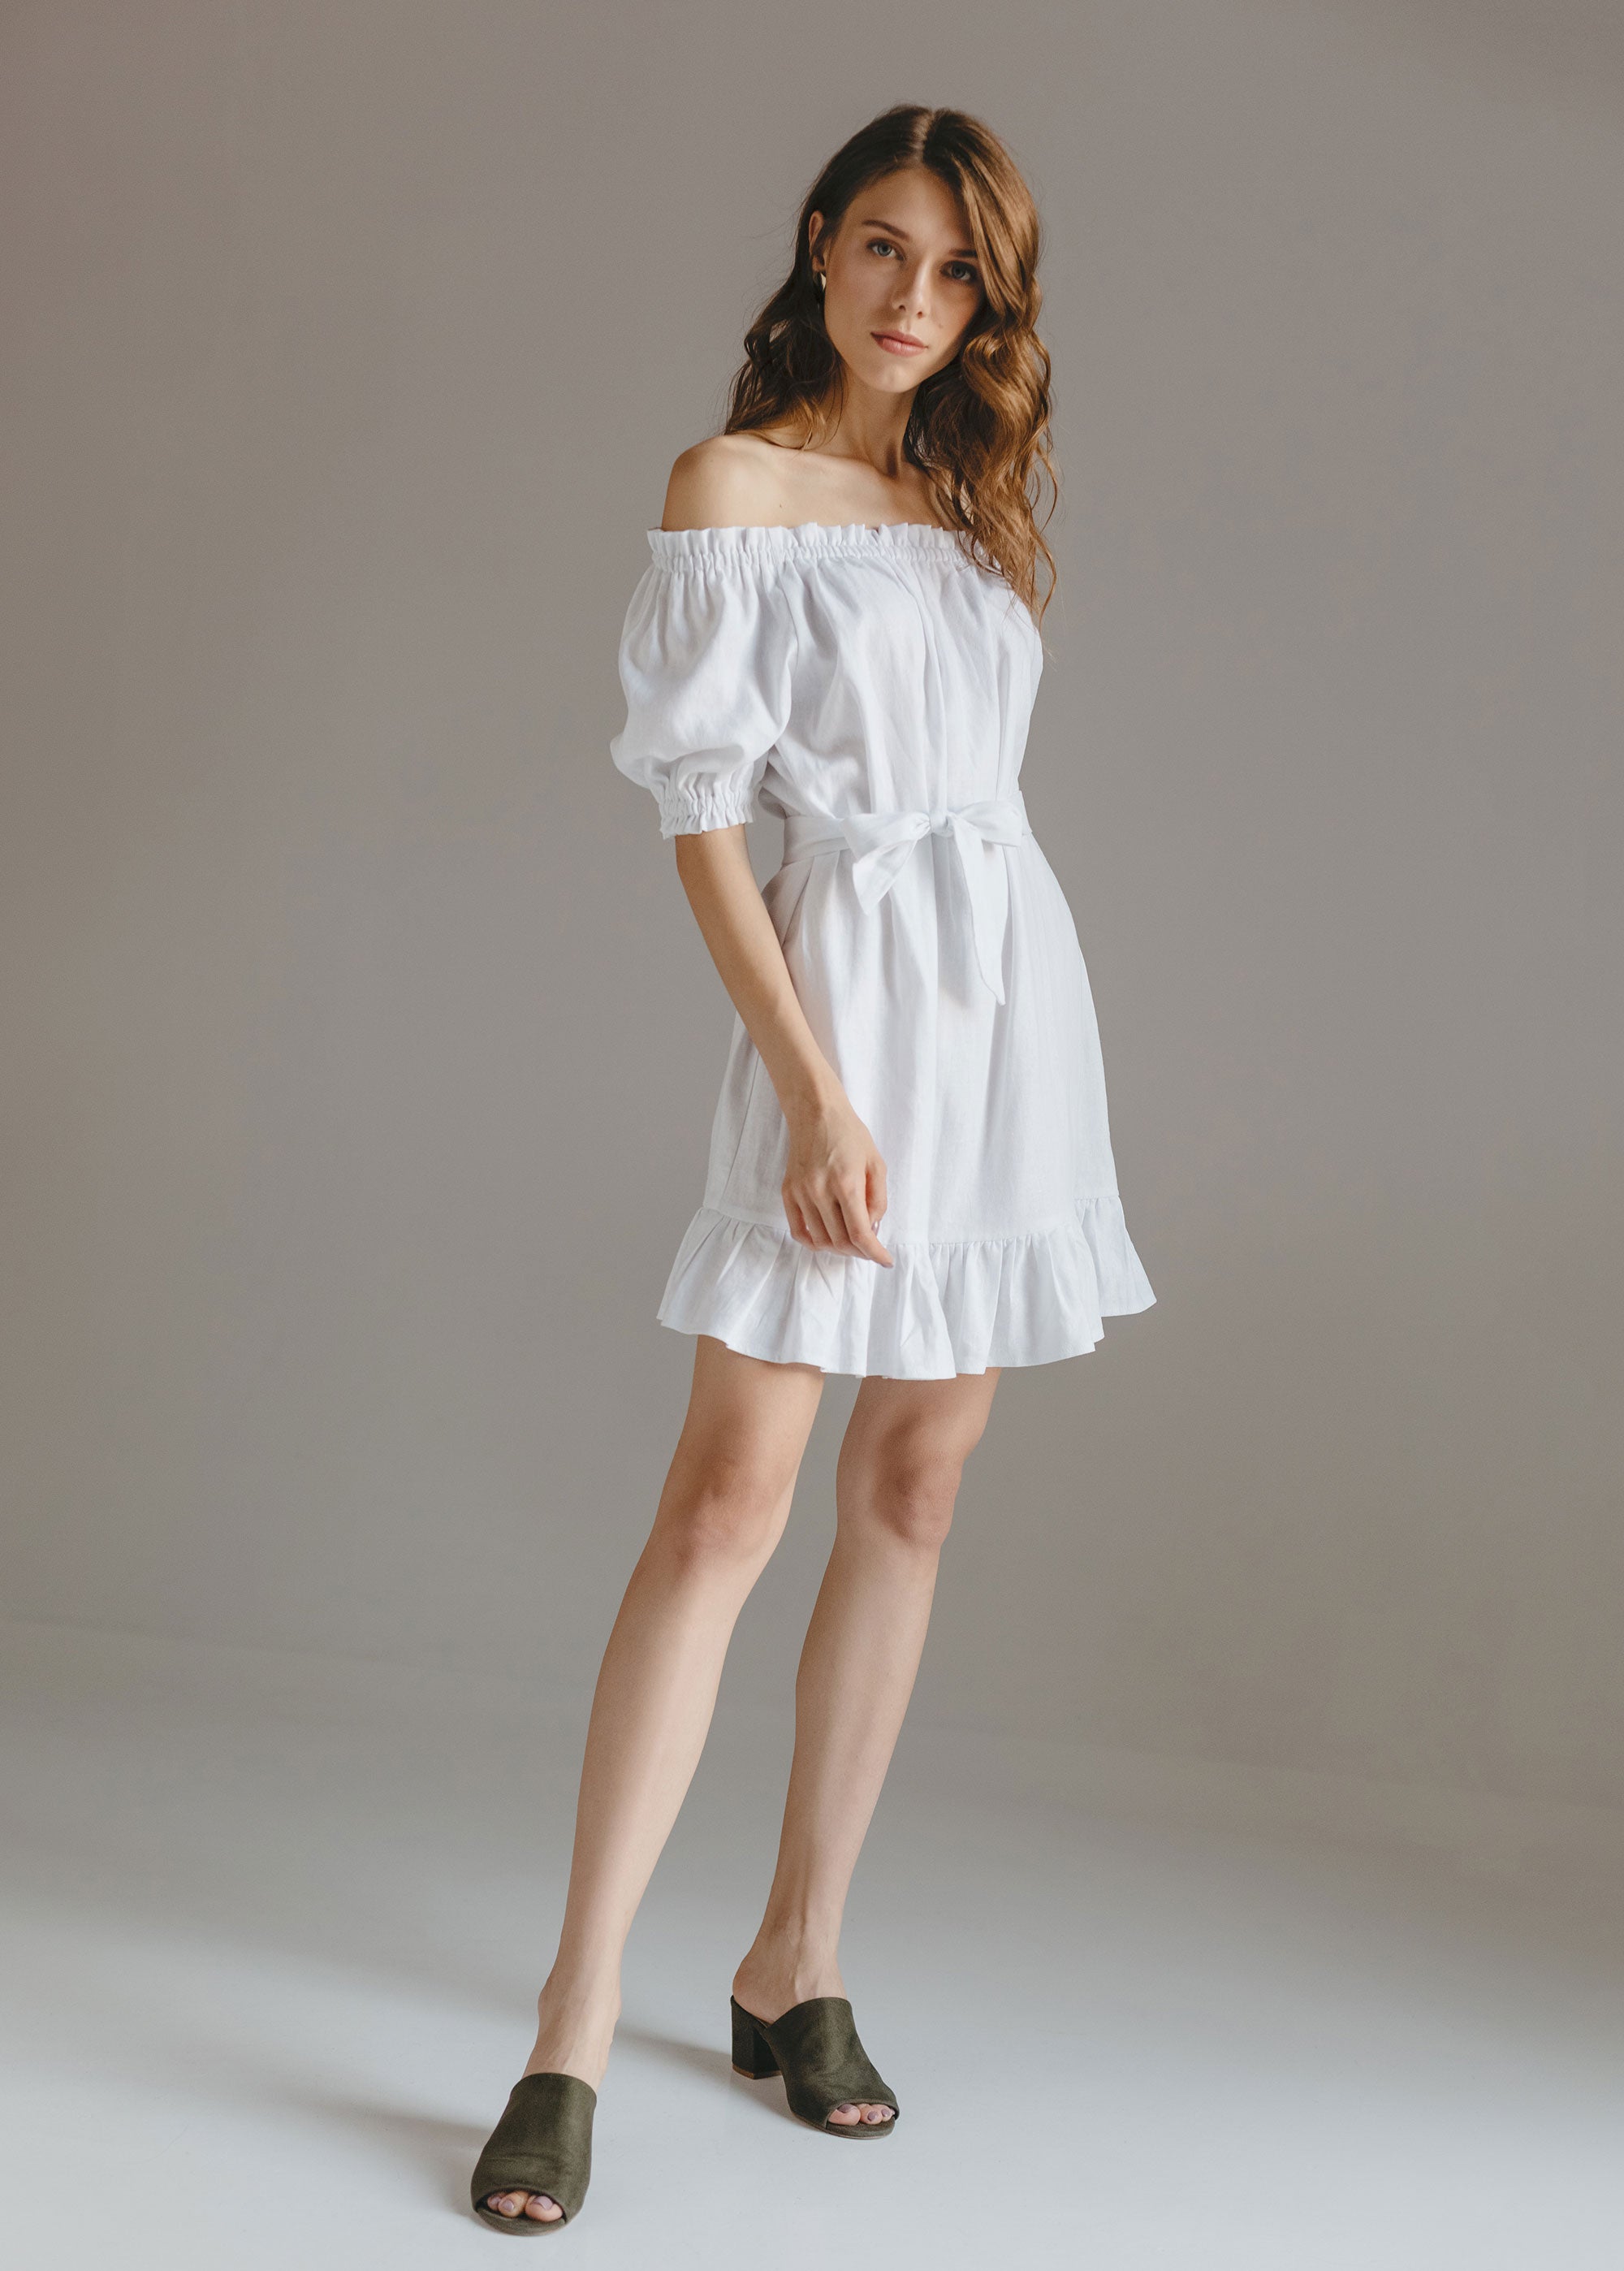 "Lia" kurzes weißes schulterfreies Kleid